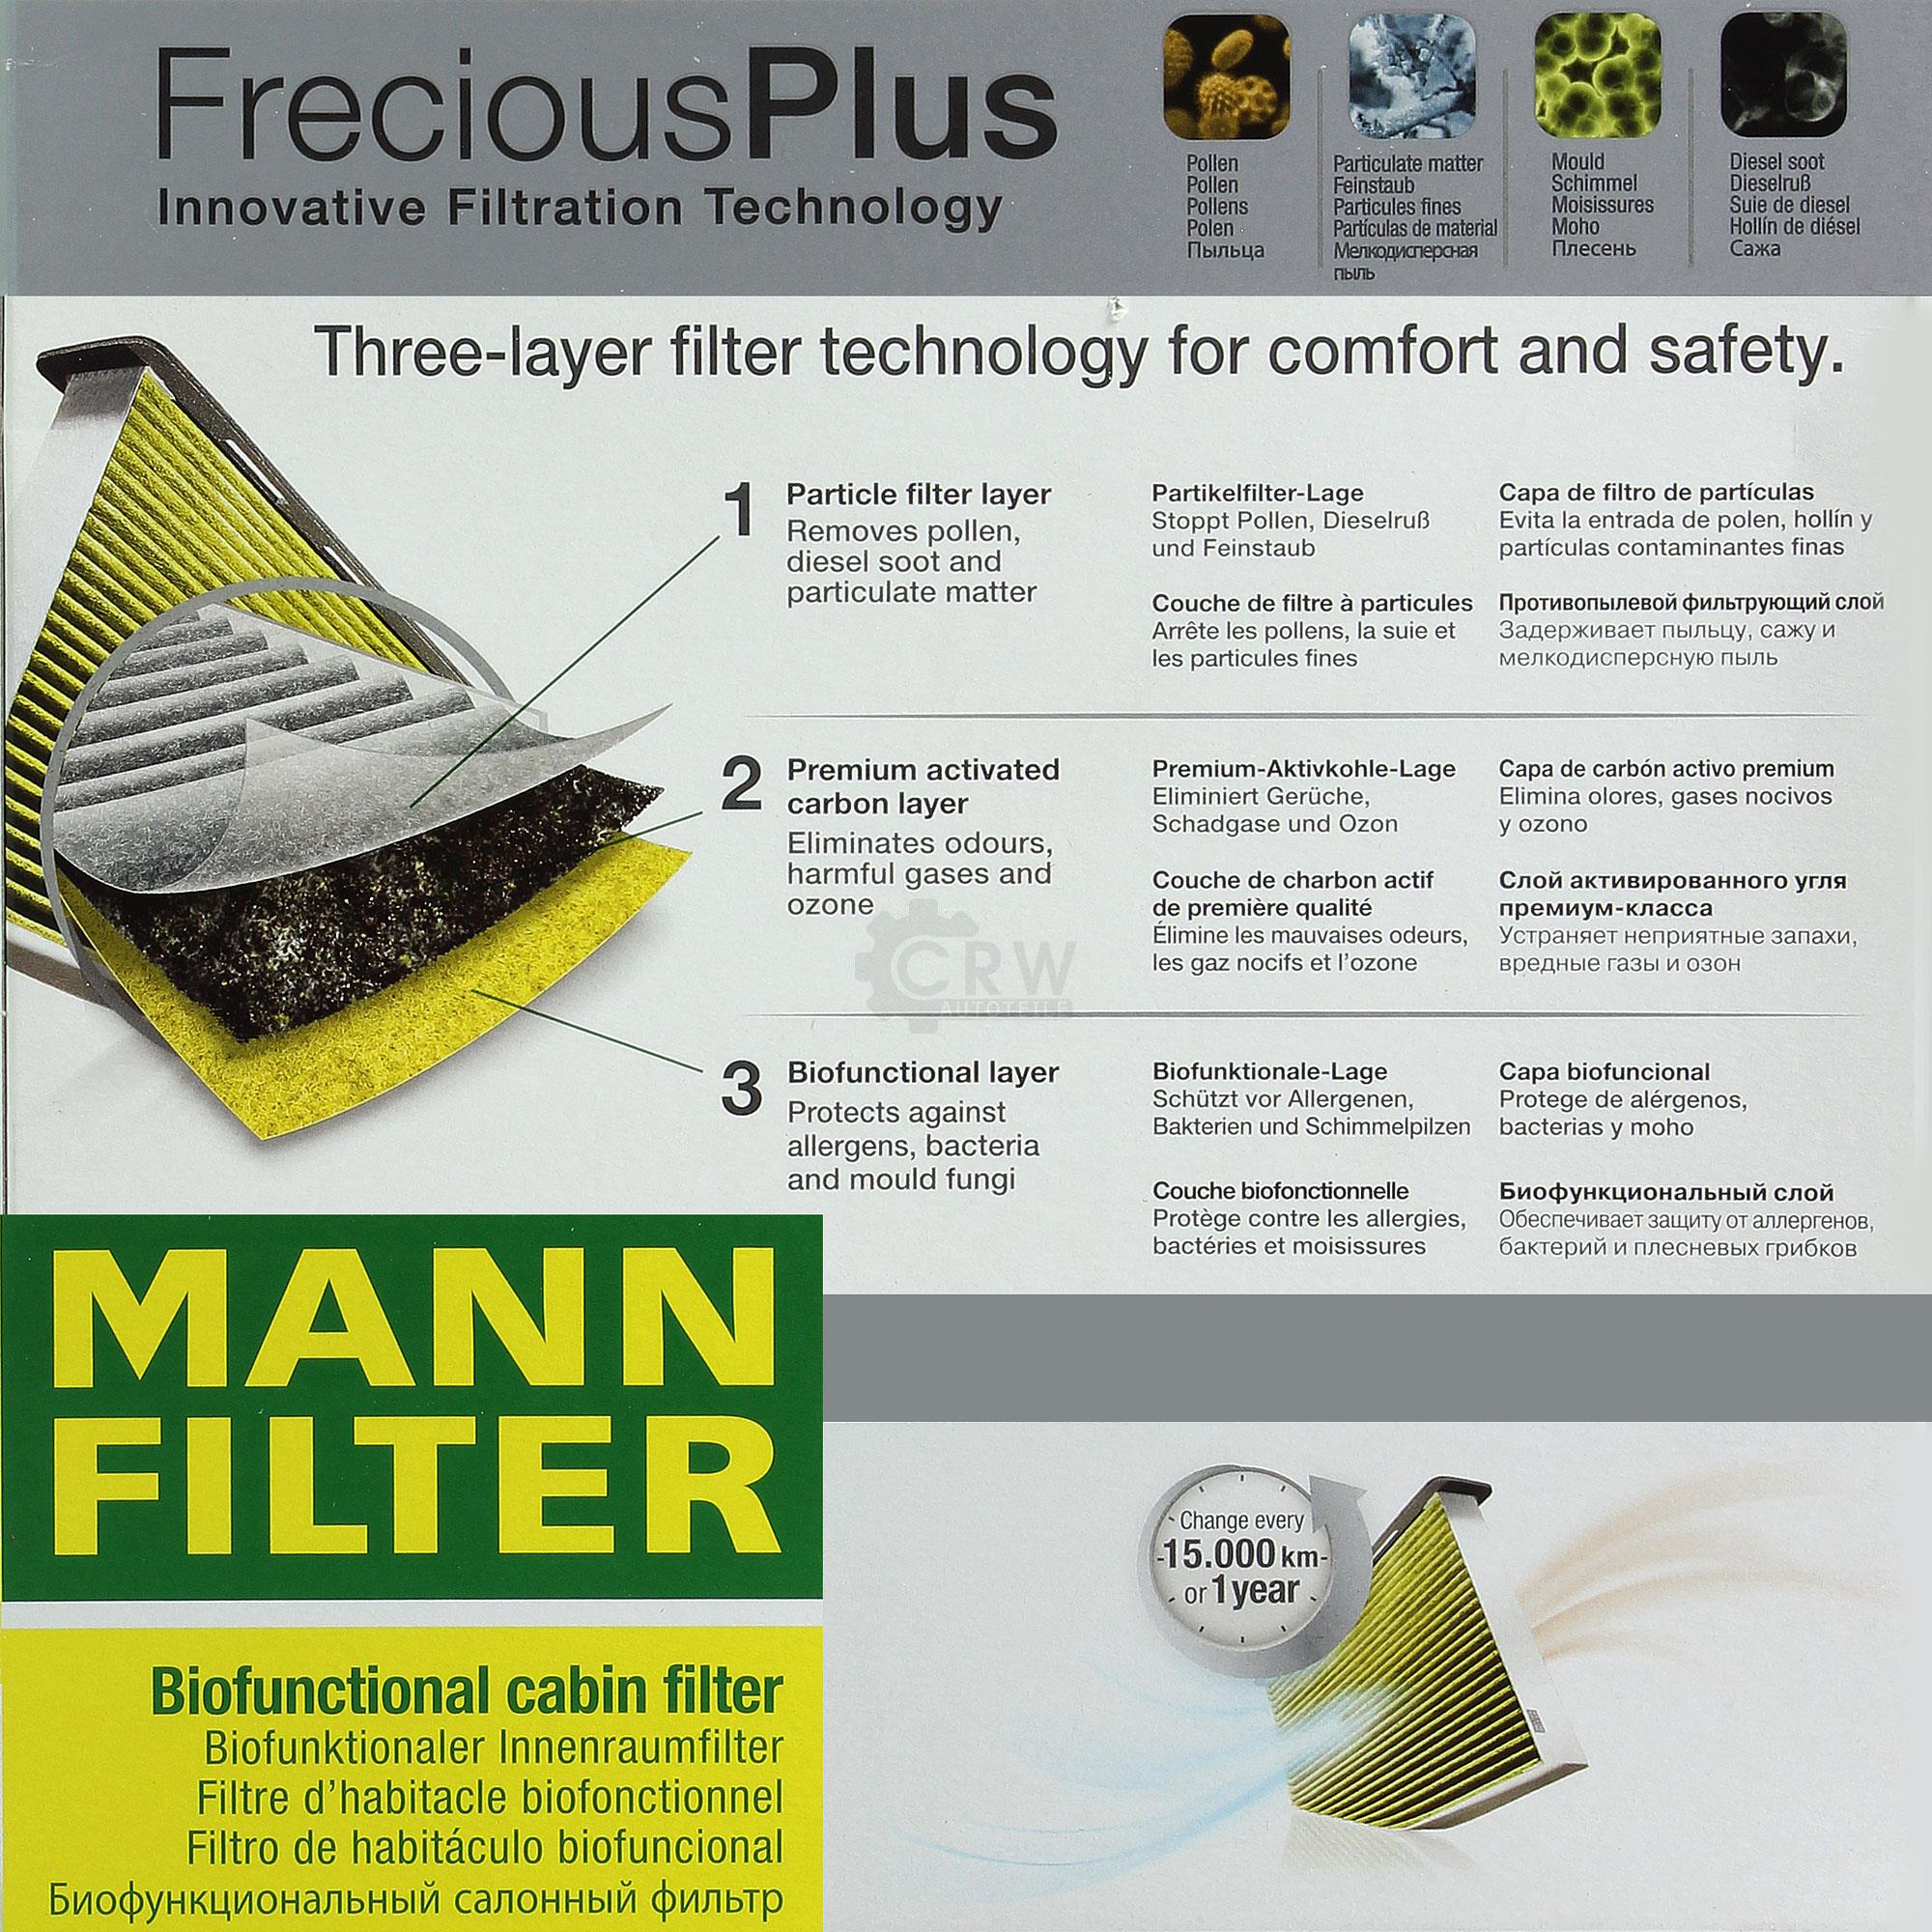 MANN-Filter Innenraumfilter Biofunctional für Allergiker FP 1936